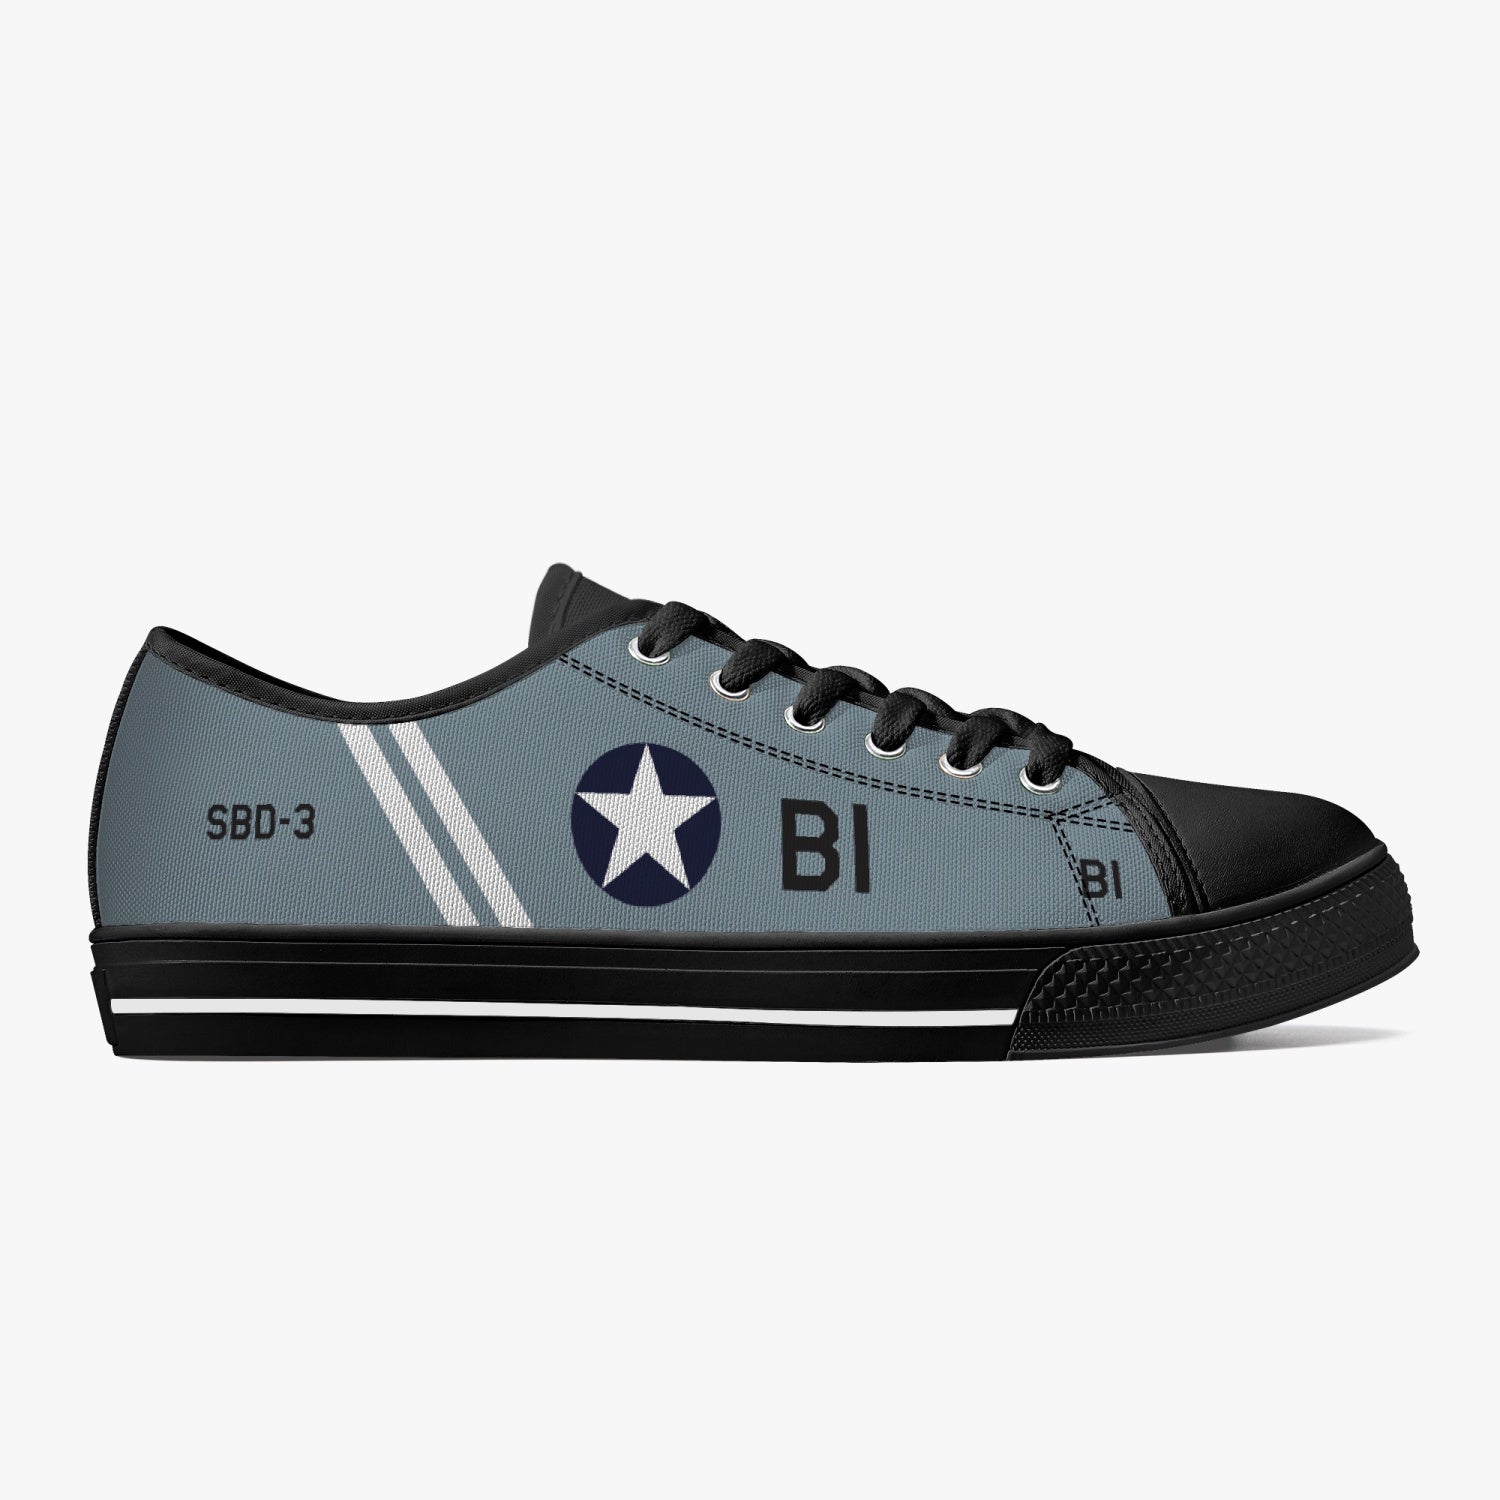 SBD Dauntless "Black B1" Low Top Canvas Shoes - I Love a Hangar